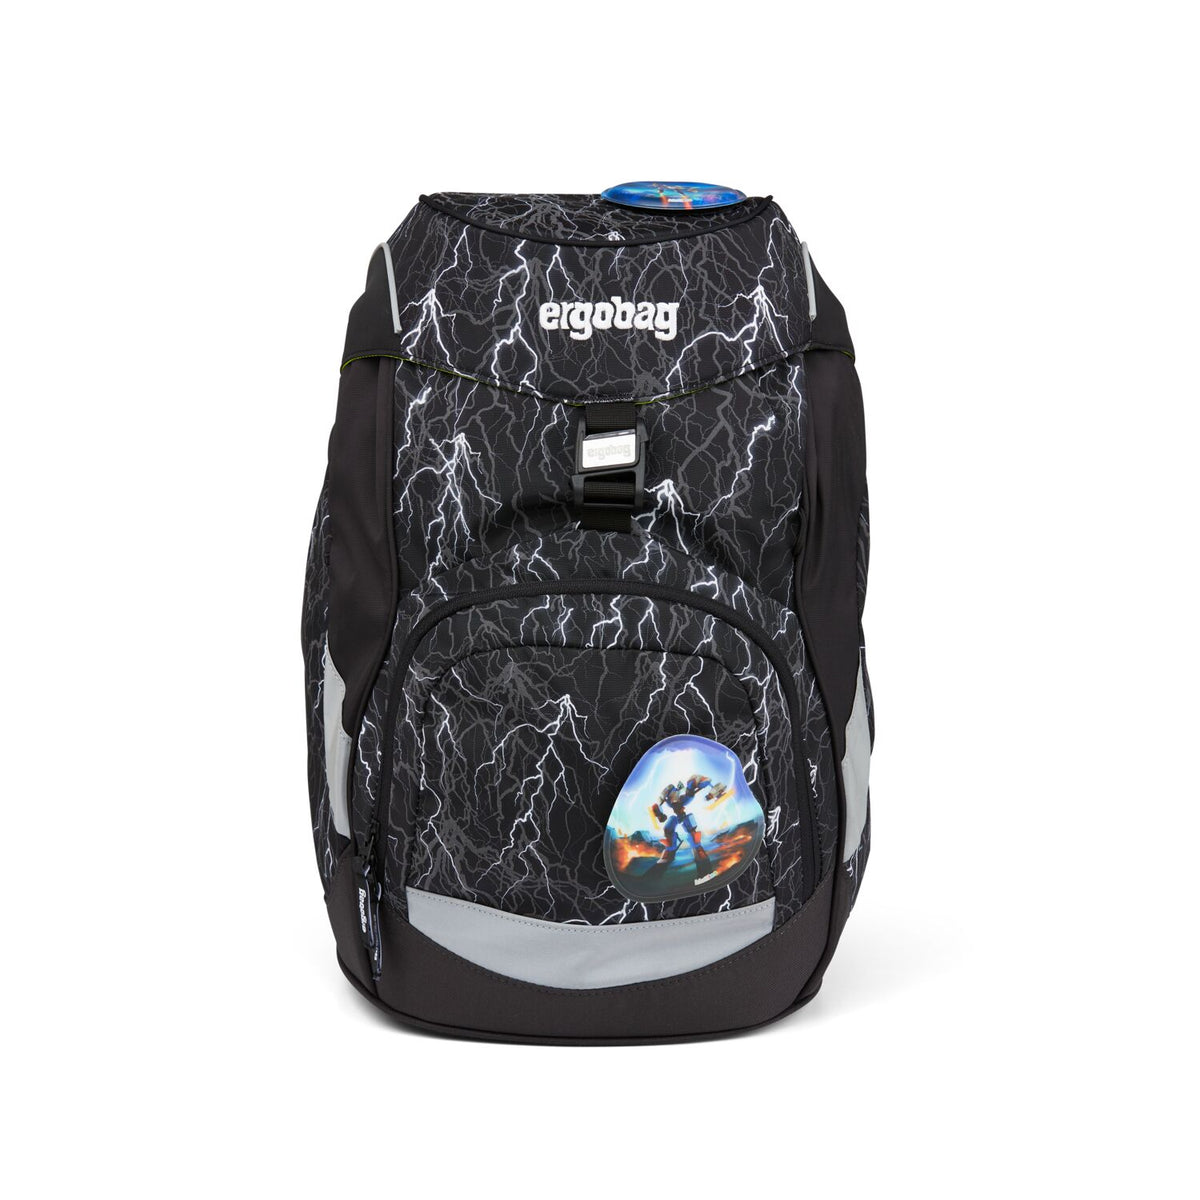 ergobag Prime School Backpack Super ReflekBear Glow